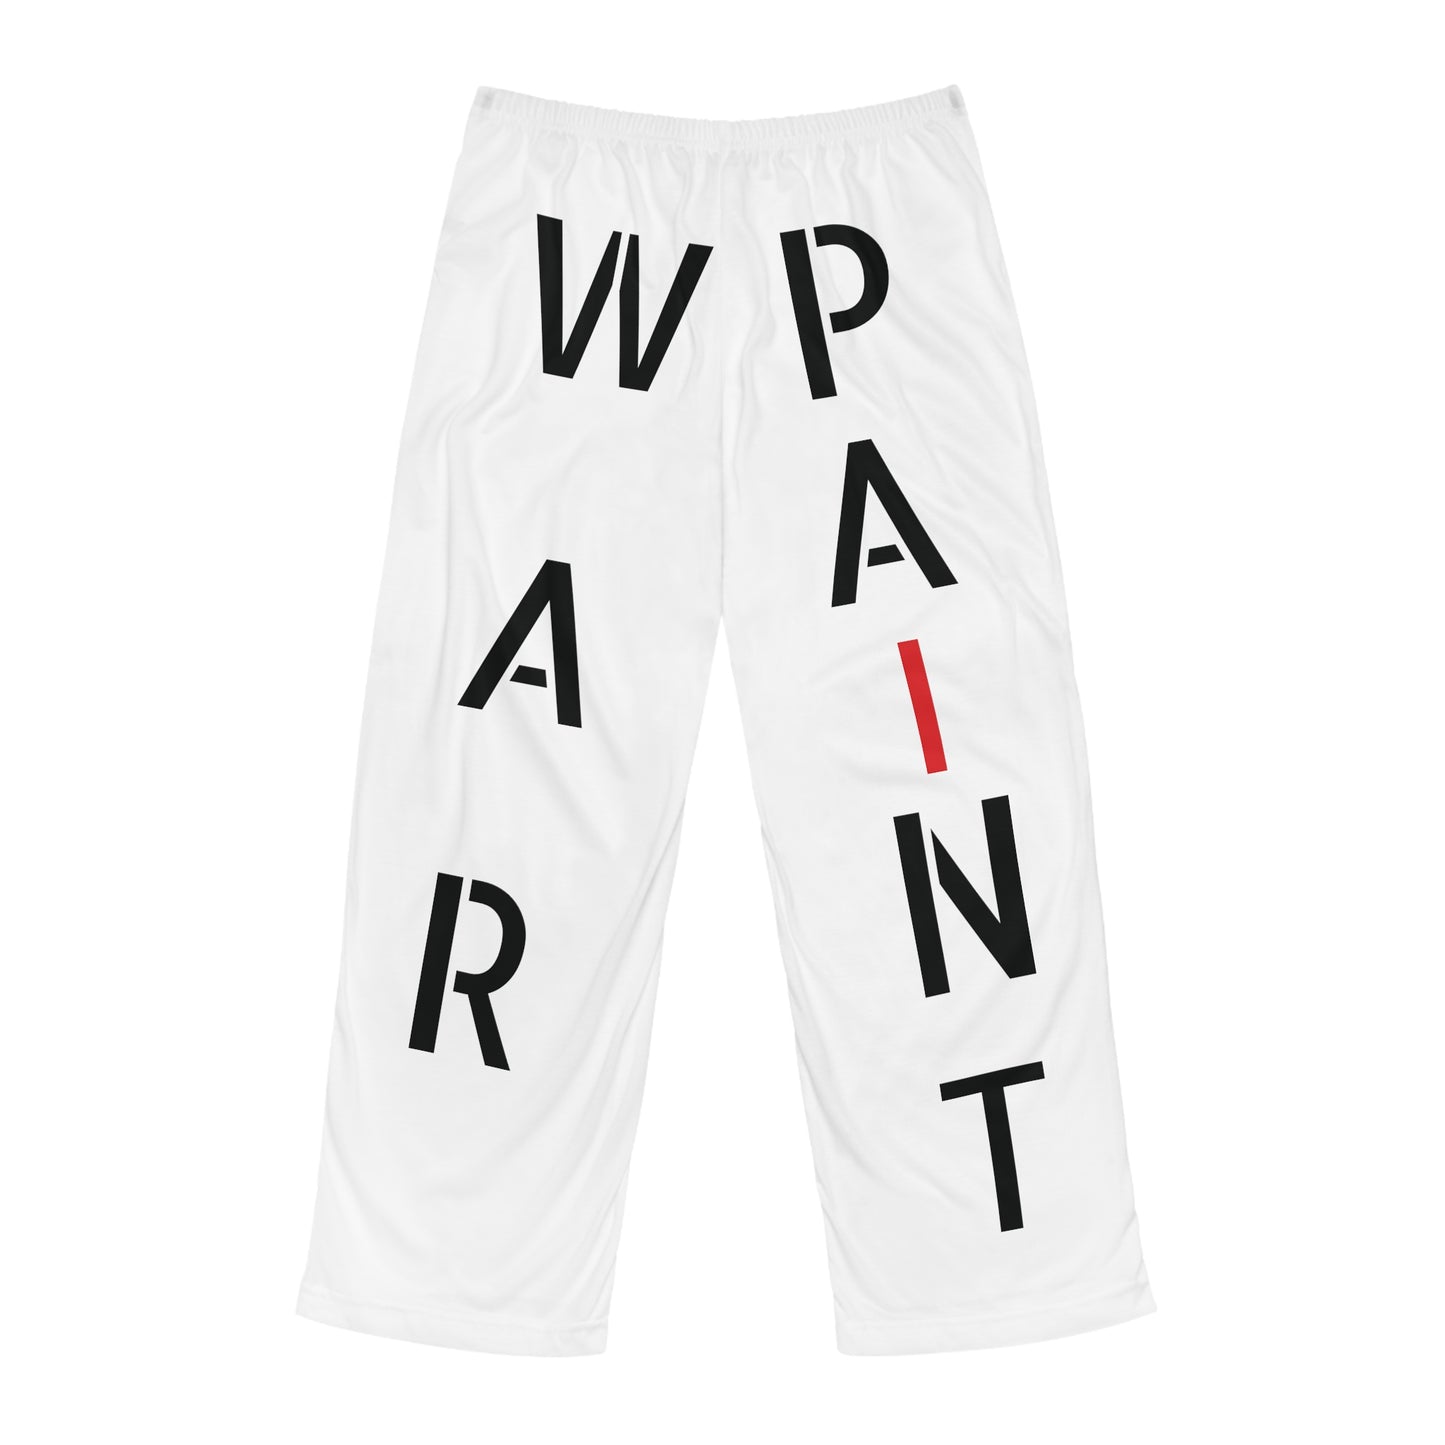 Wear Your WarPaint - Men's Pajama Pants (AOP)